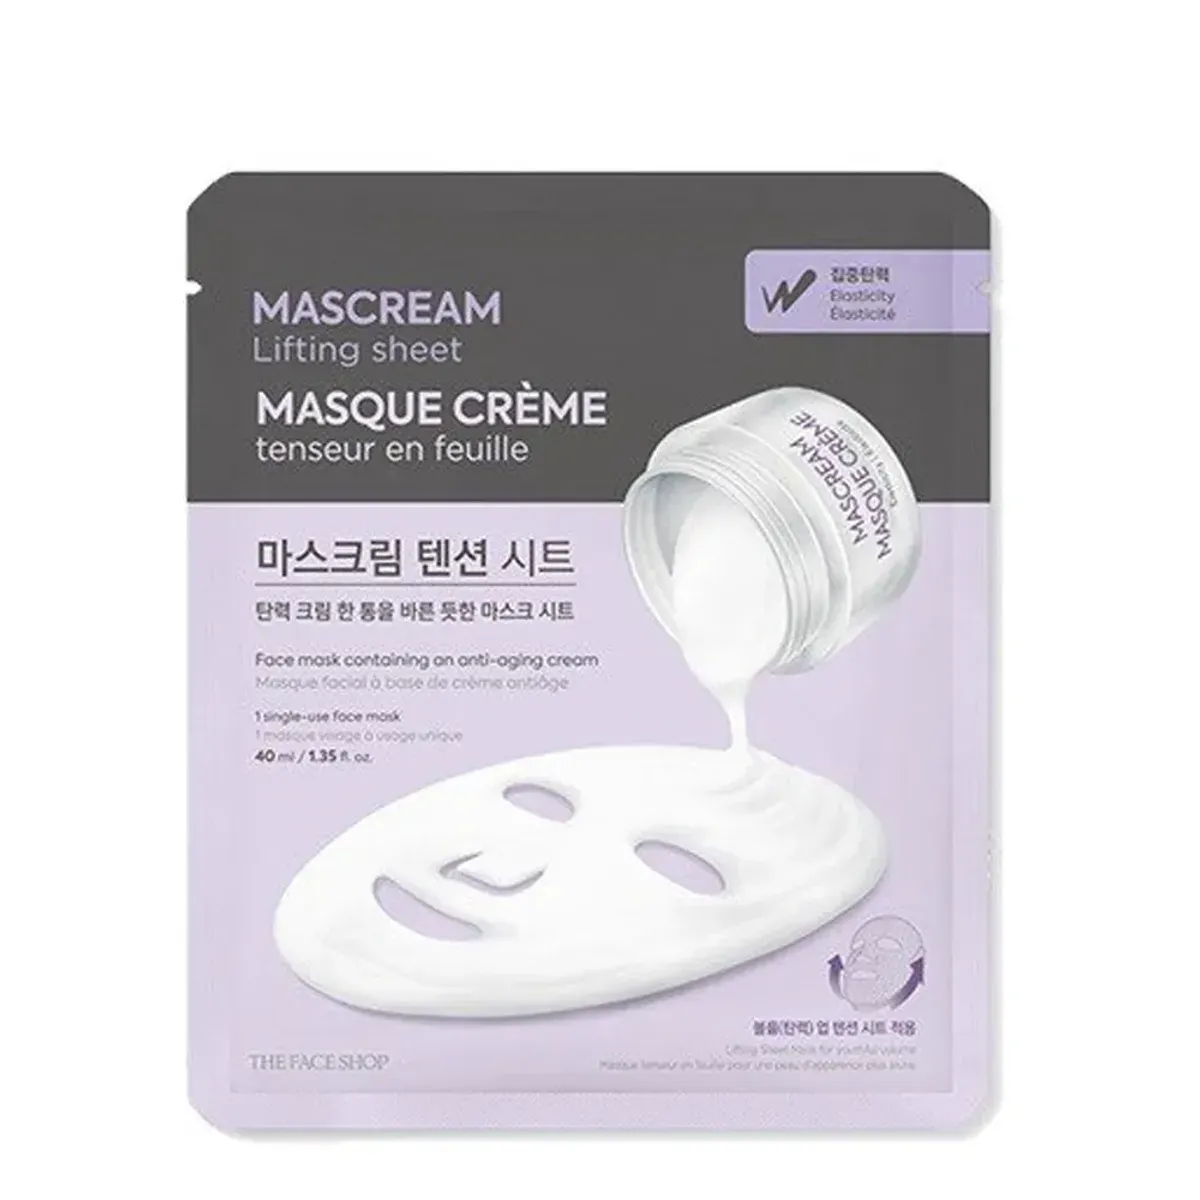 mat-na-lam-san-chac-da-deeply-firming-mascream-lifting-sheet-mask-6